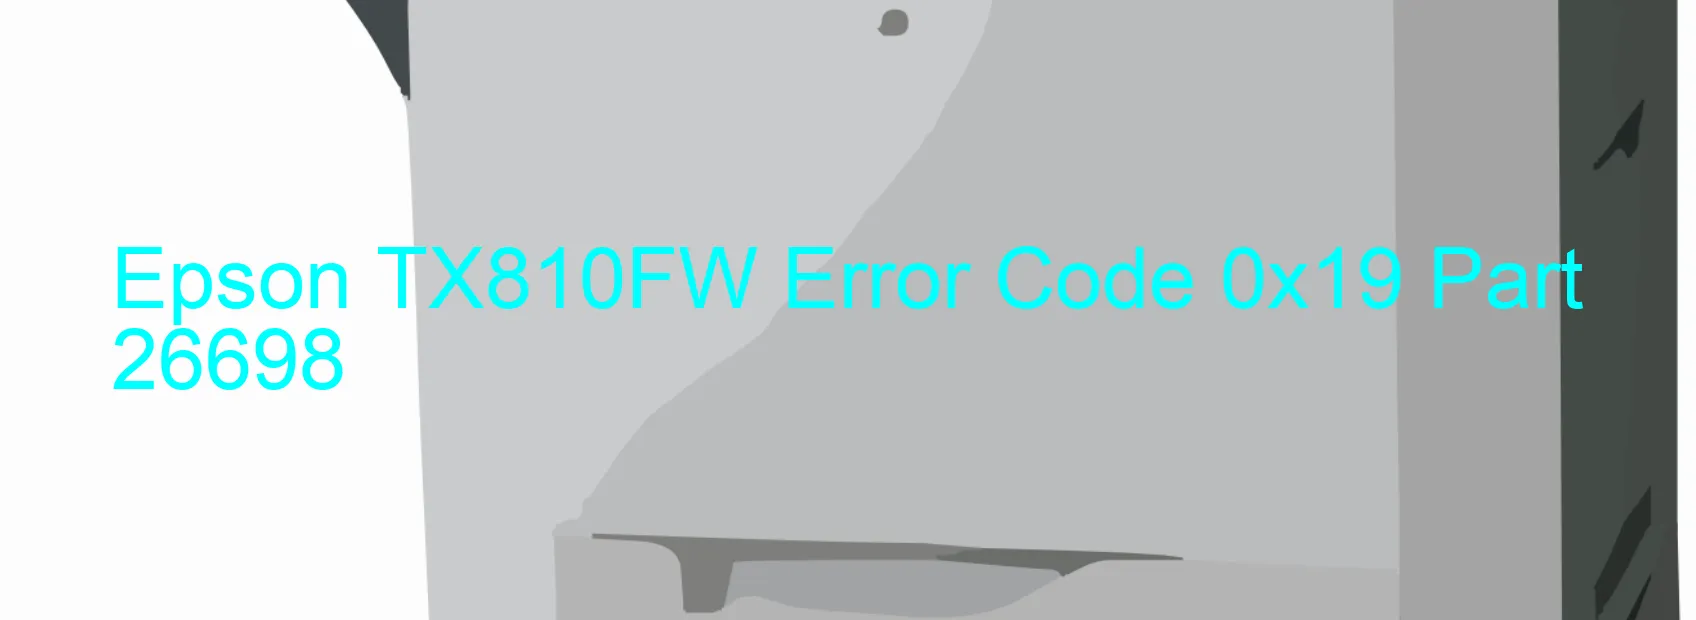 Epson TX810FW Error Code 0x19 Part 26698